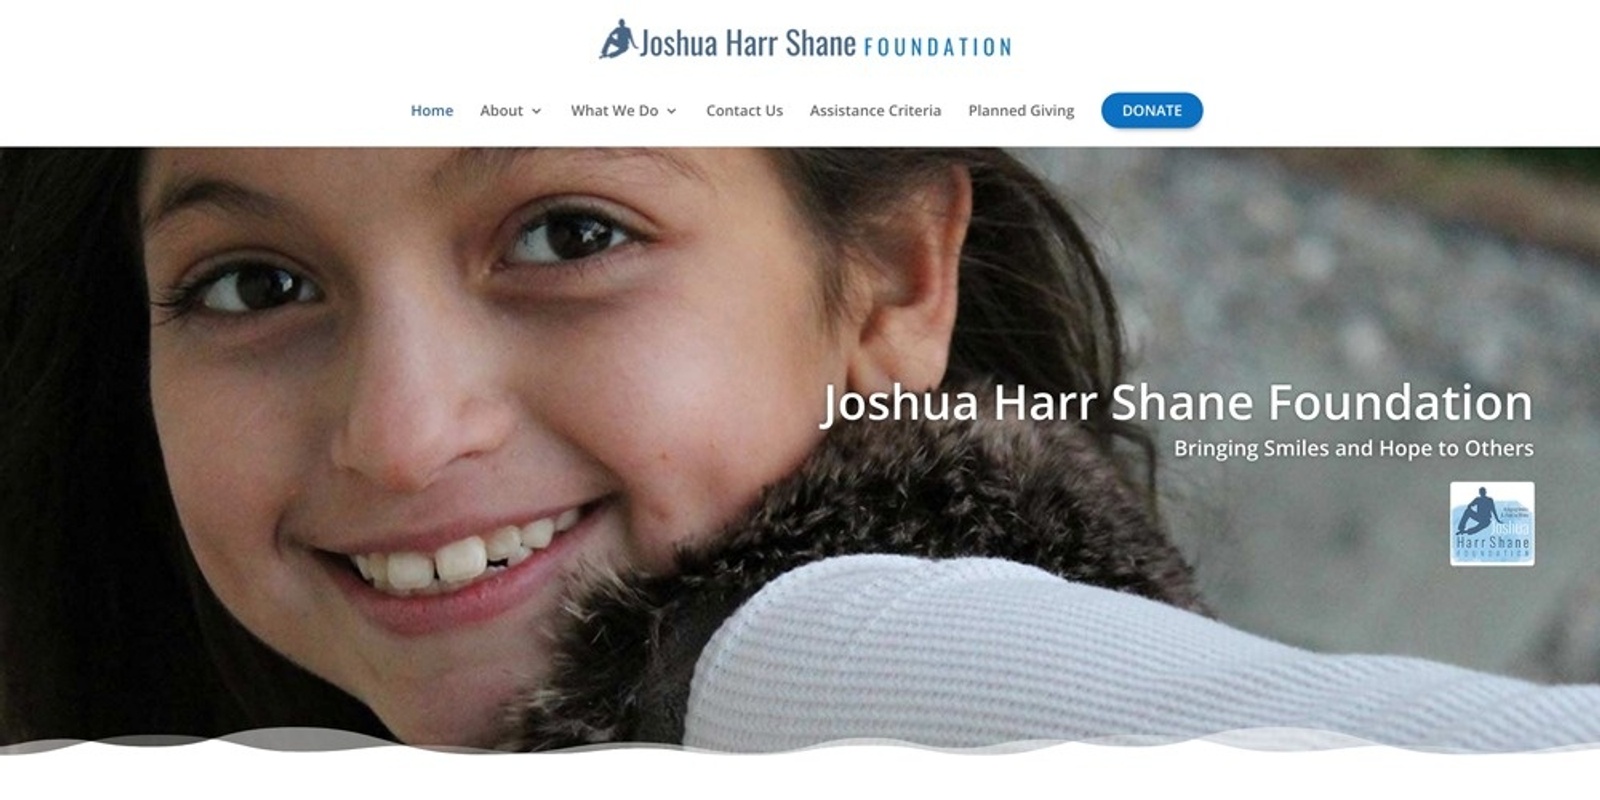 Joshua Harr Shane Foundation's banner